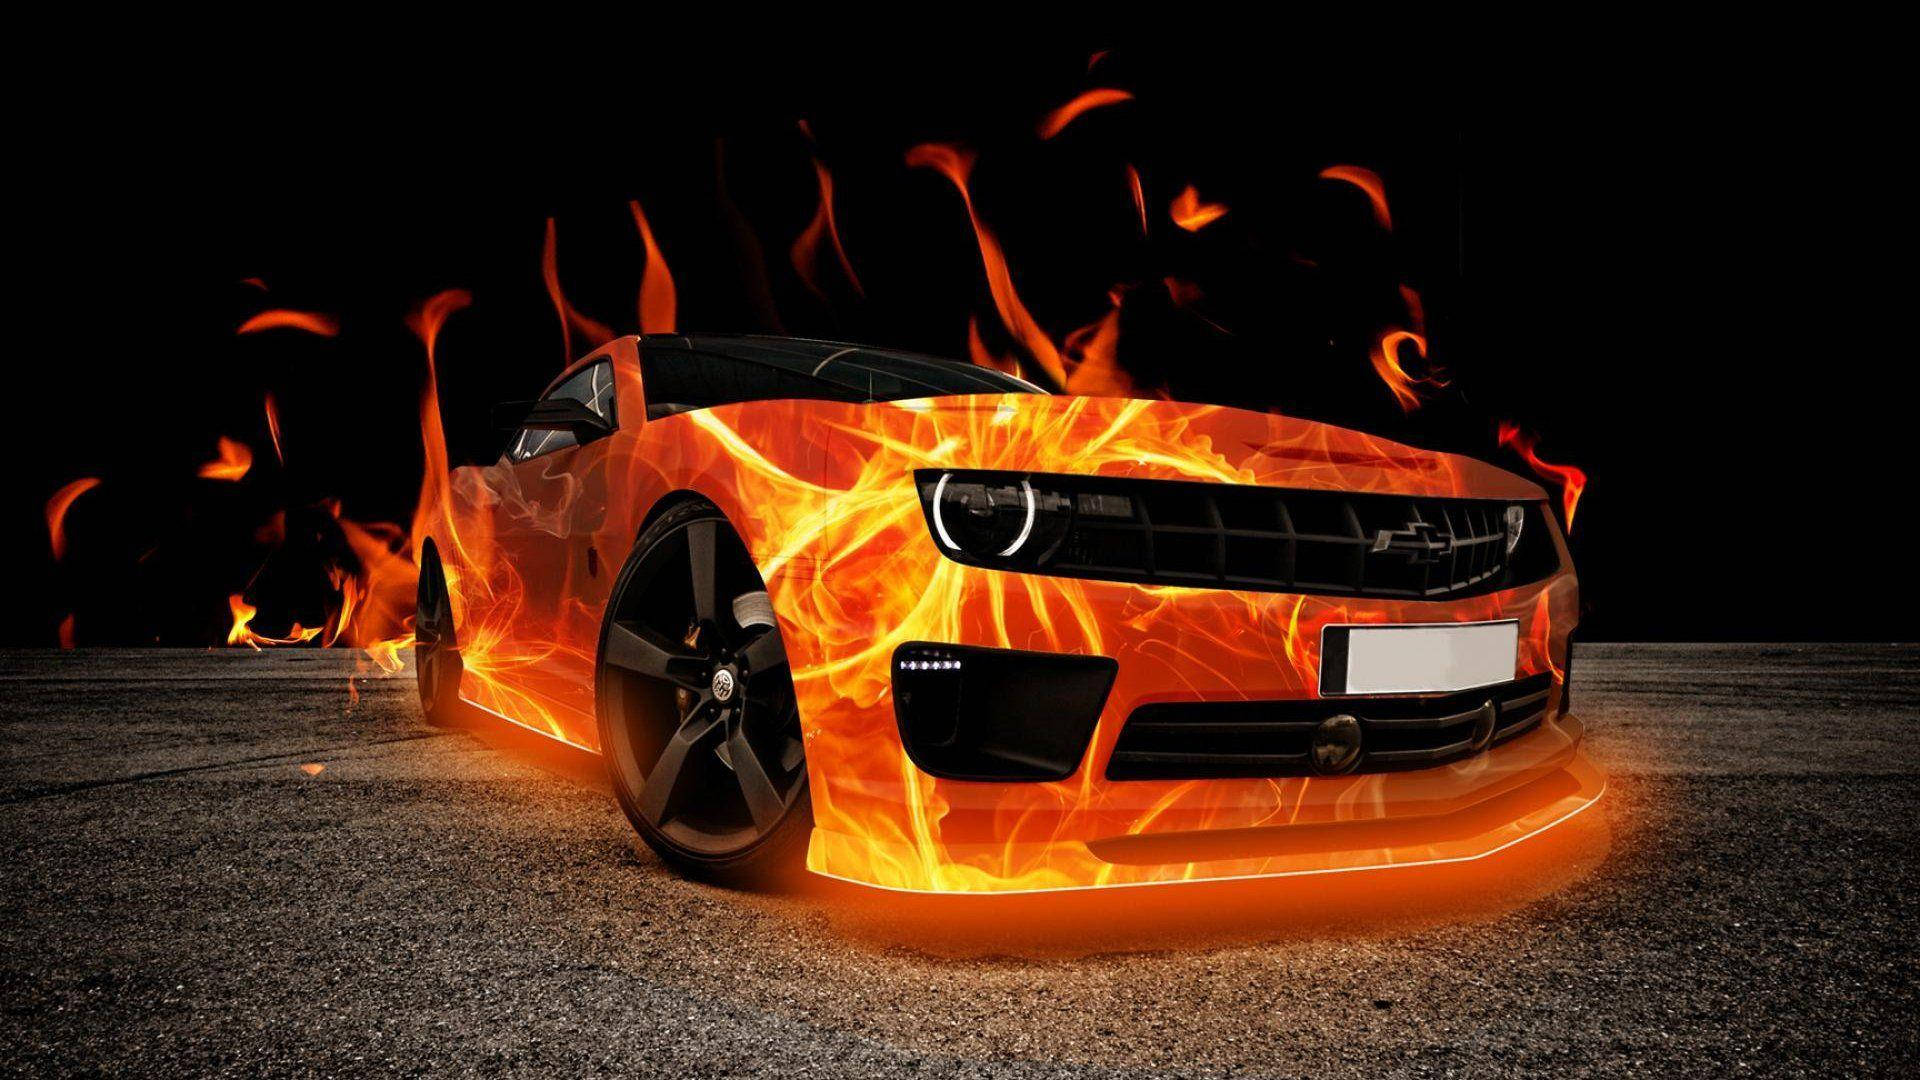 Fiery Beast - A Cool 3D Car on Fire Wallpaper